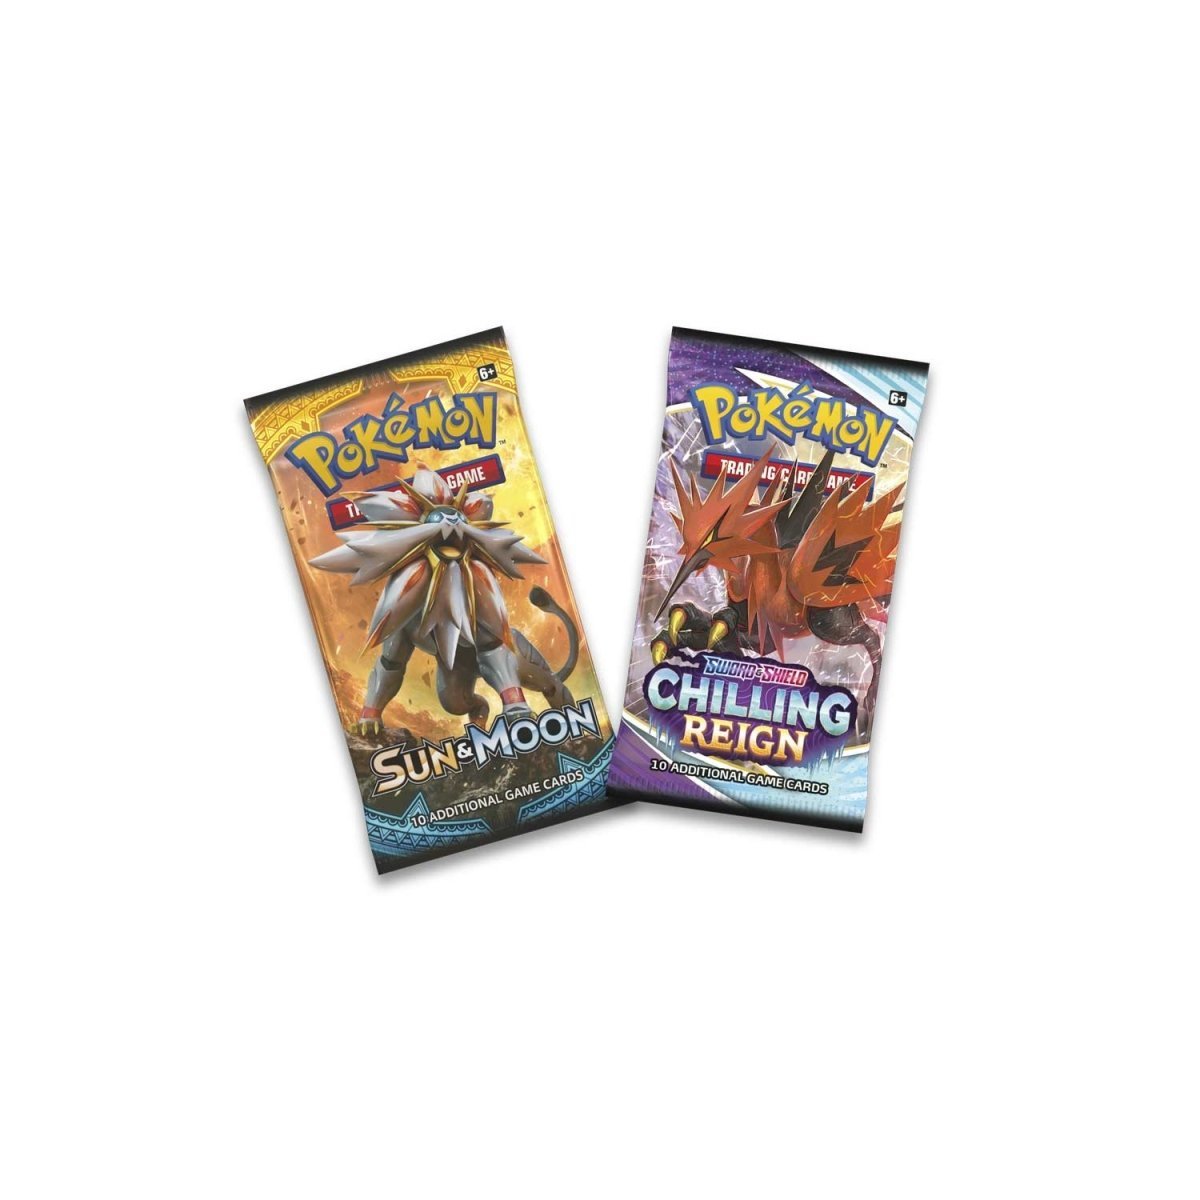 Pokémon TCG: First Partner Pack - Sinnoh - PokeRvm